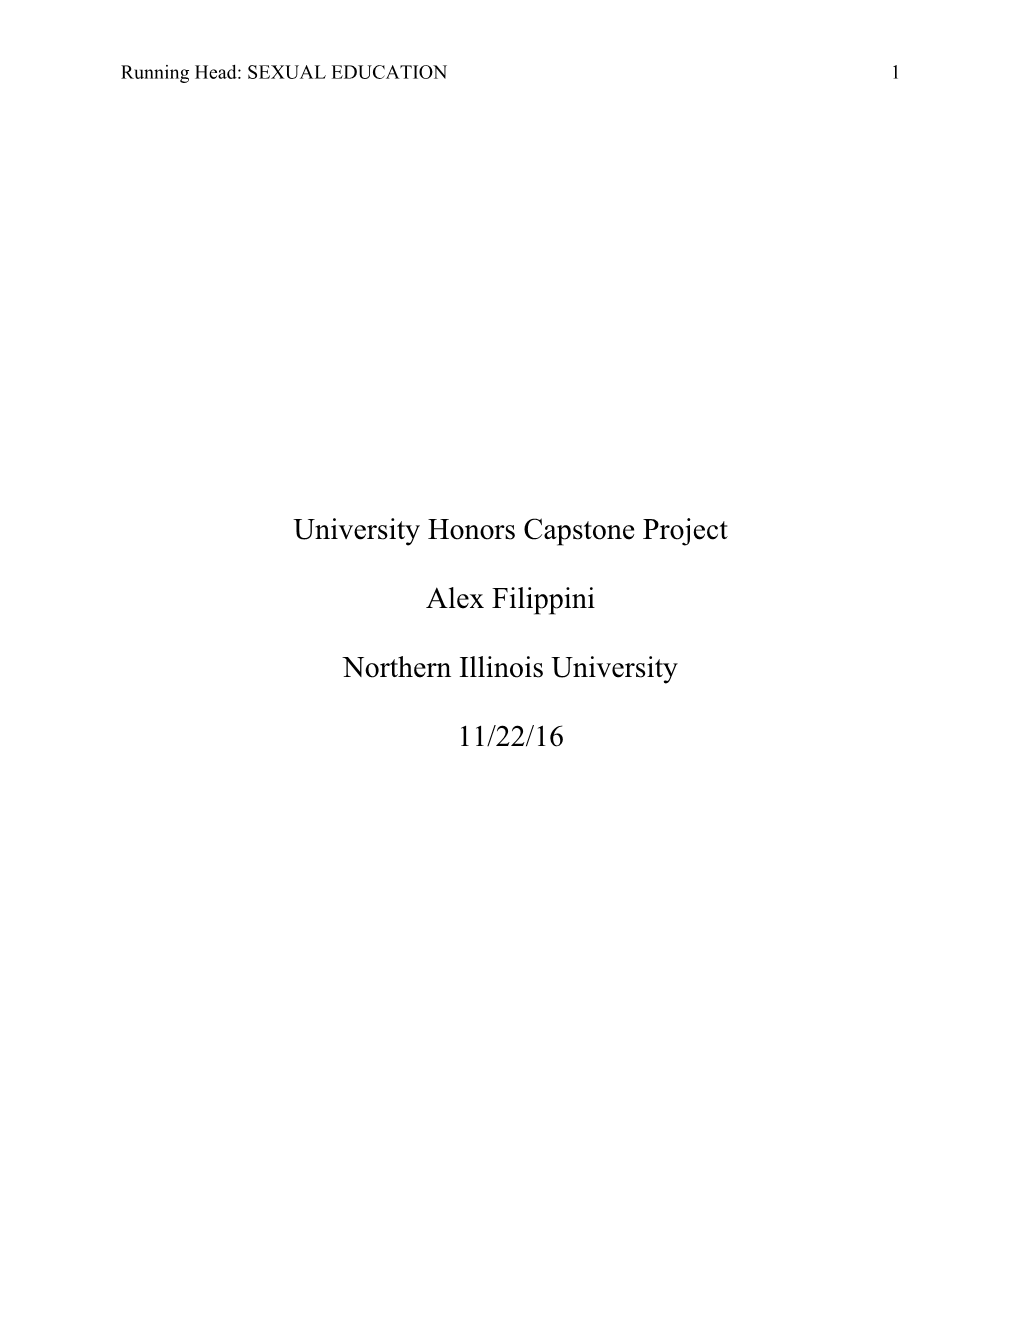 University Honors Capstone Project Alex Filippini Northern Illinois